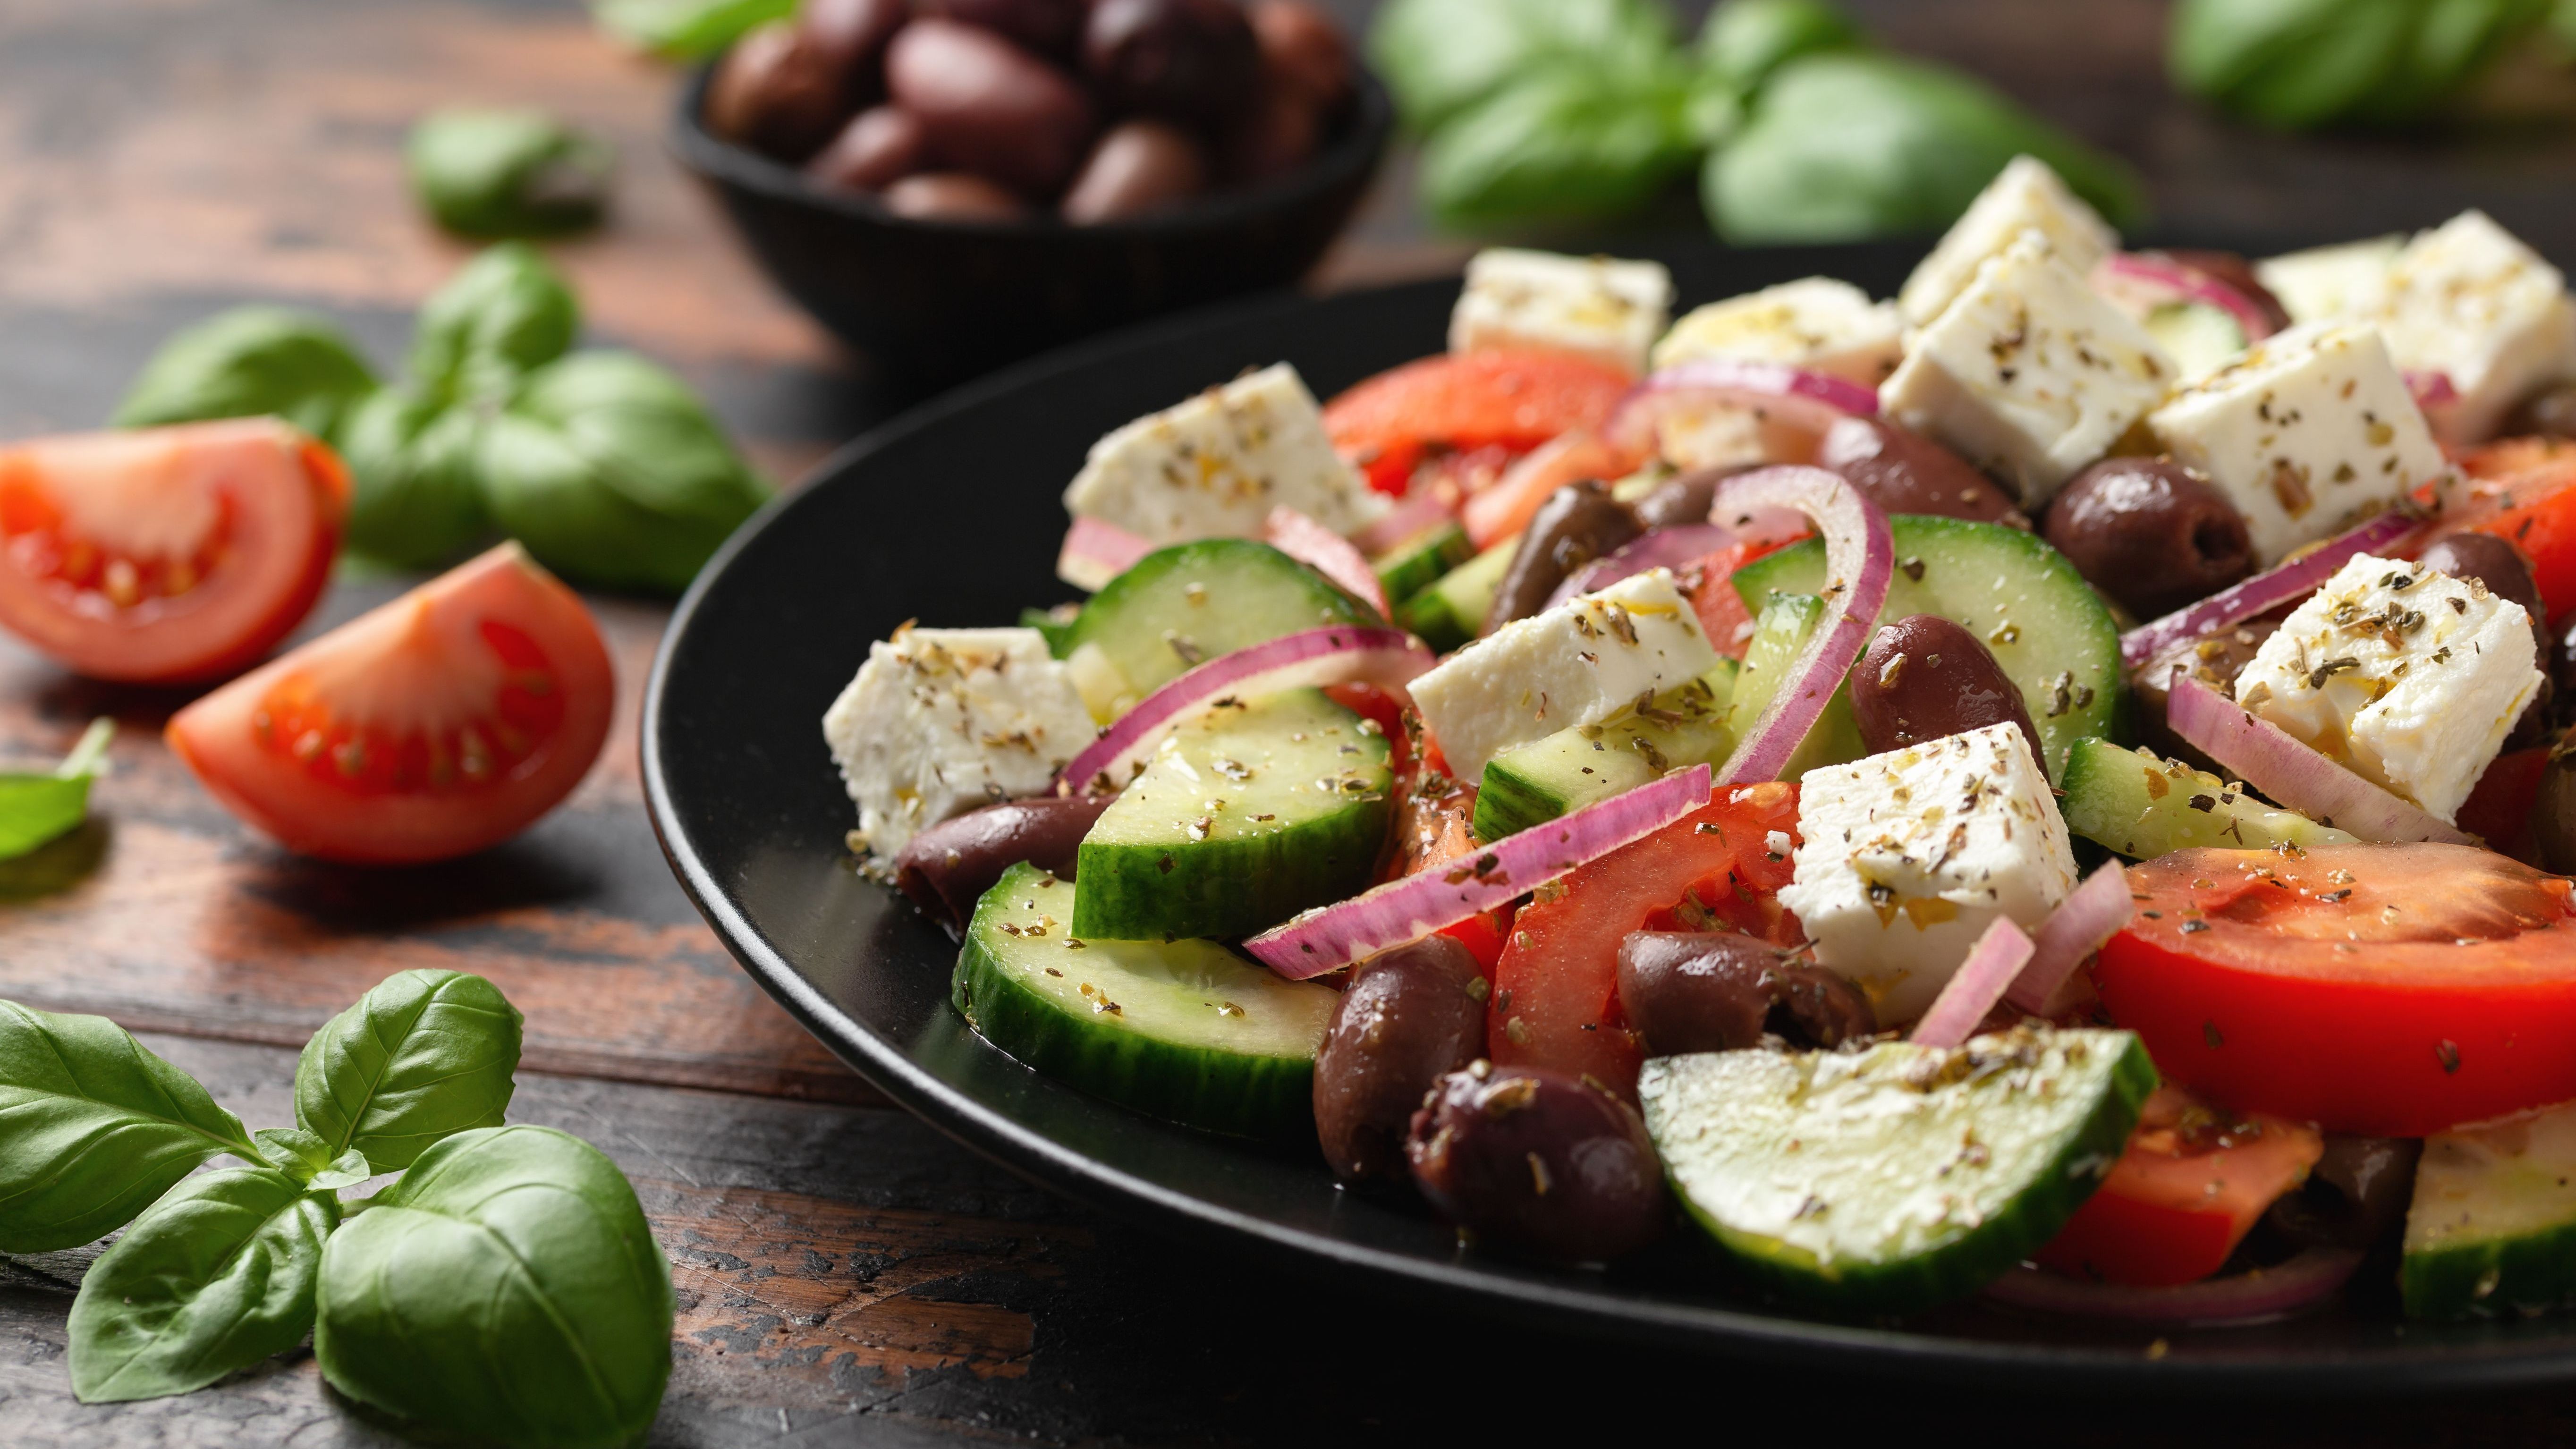 Wir zeigen dir, wie dir ganz leicht ein leckerer Griechischer Salat gelingt.